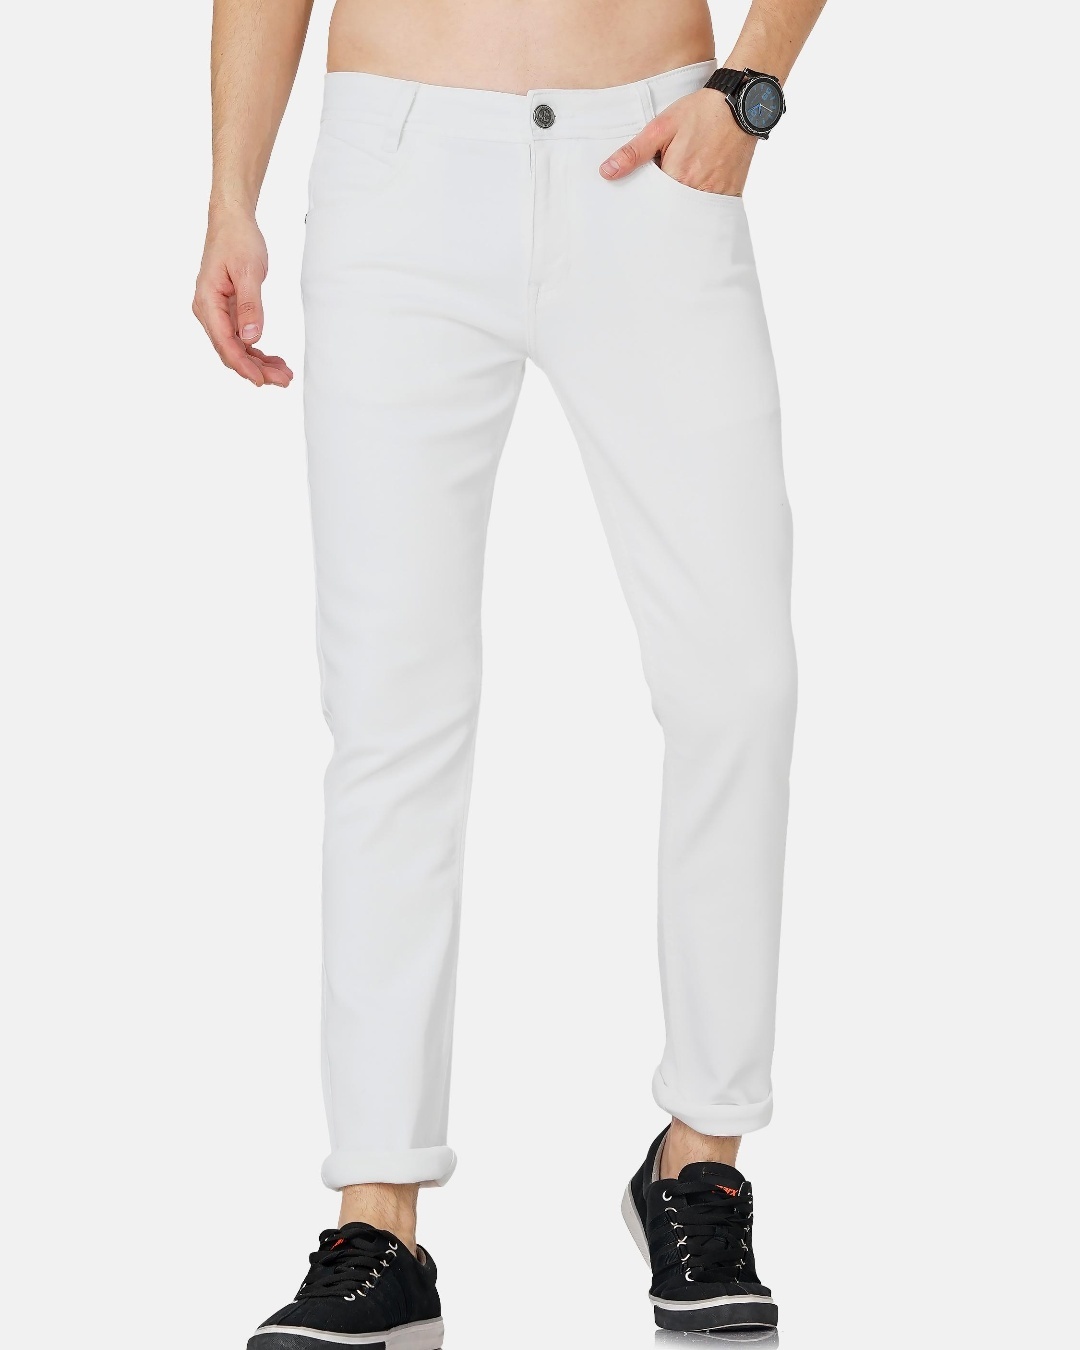 Buy Men's White Slim Fit Jeans Online at Bewakoof